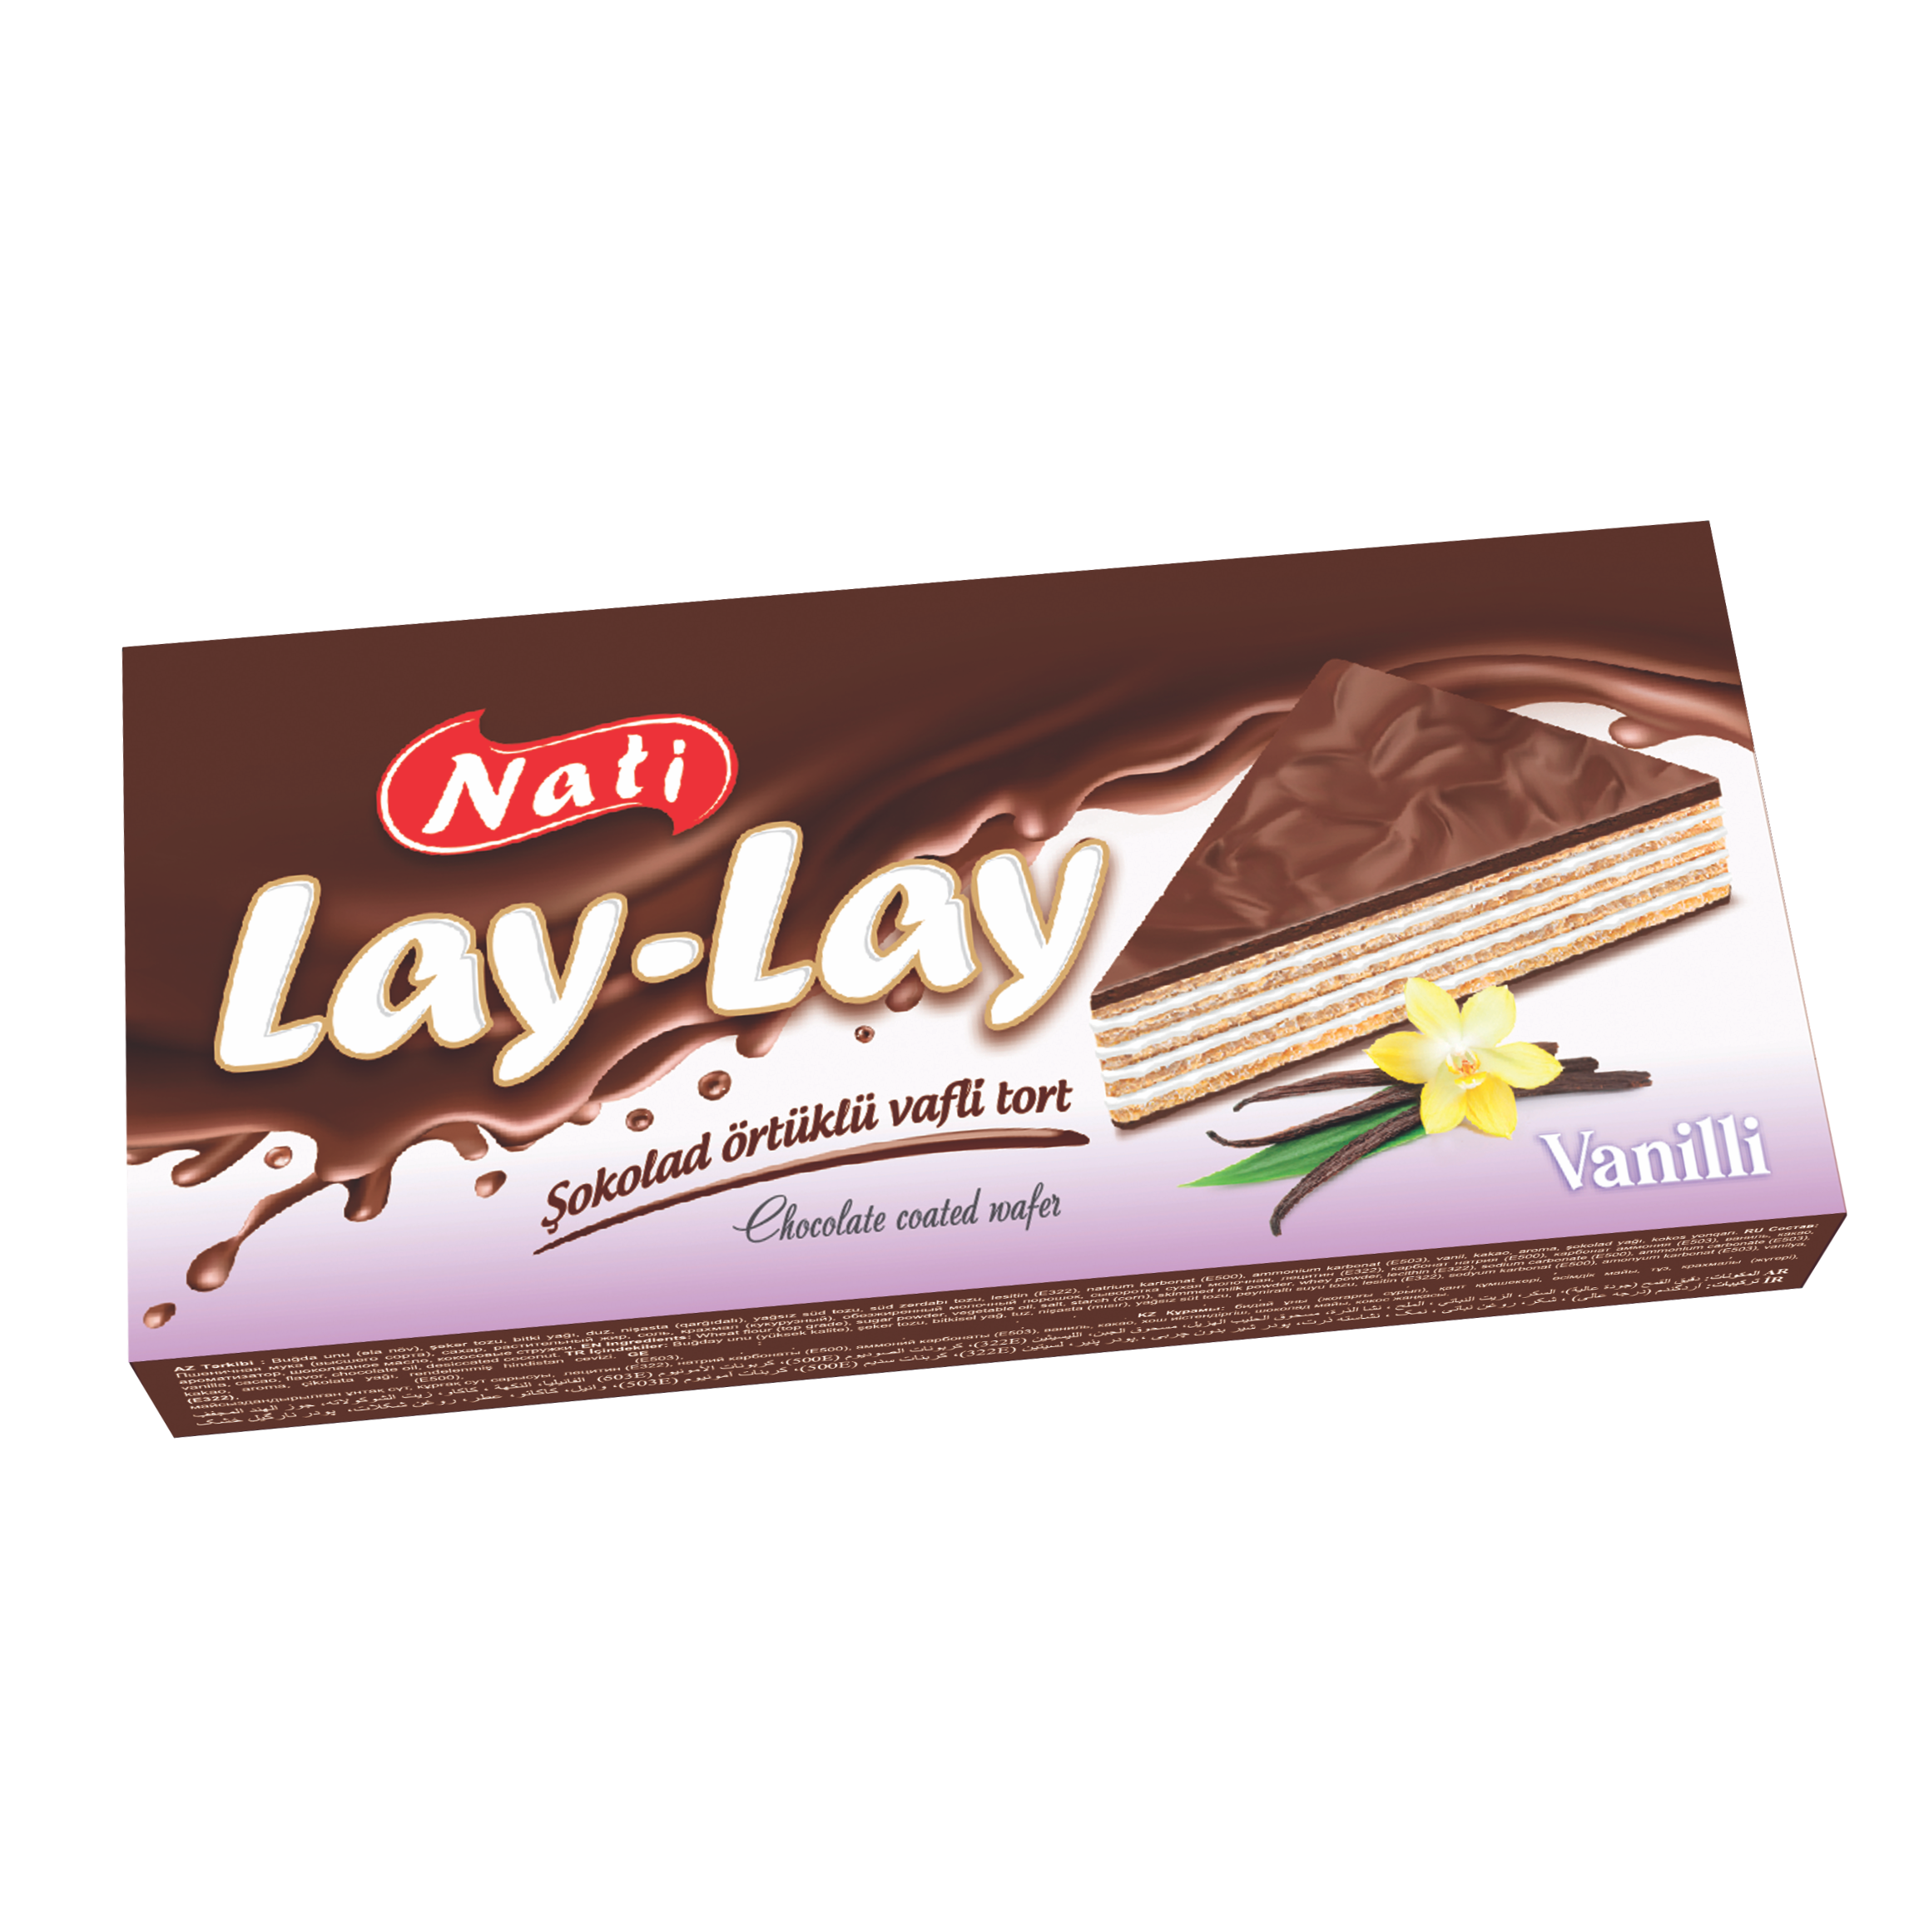 “LAY-LAY” WAFER CAKE WITH VANILLA CREAM